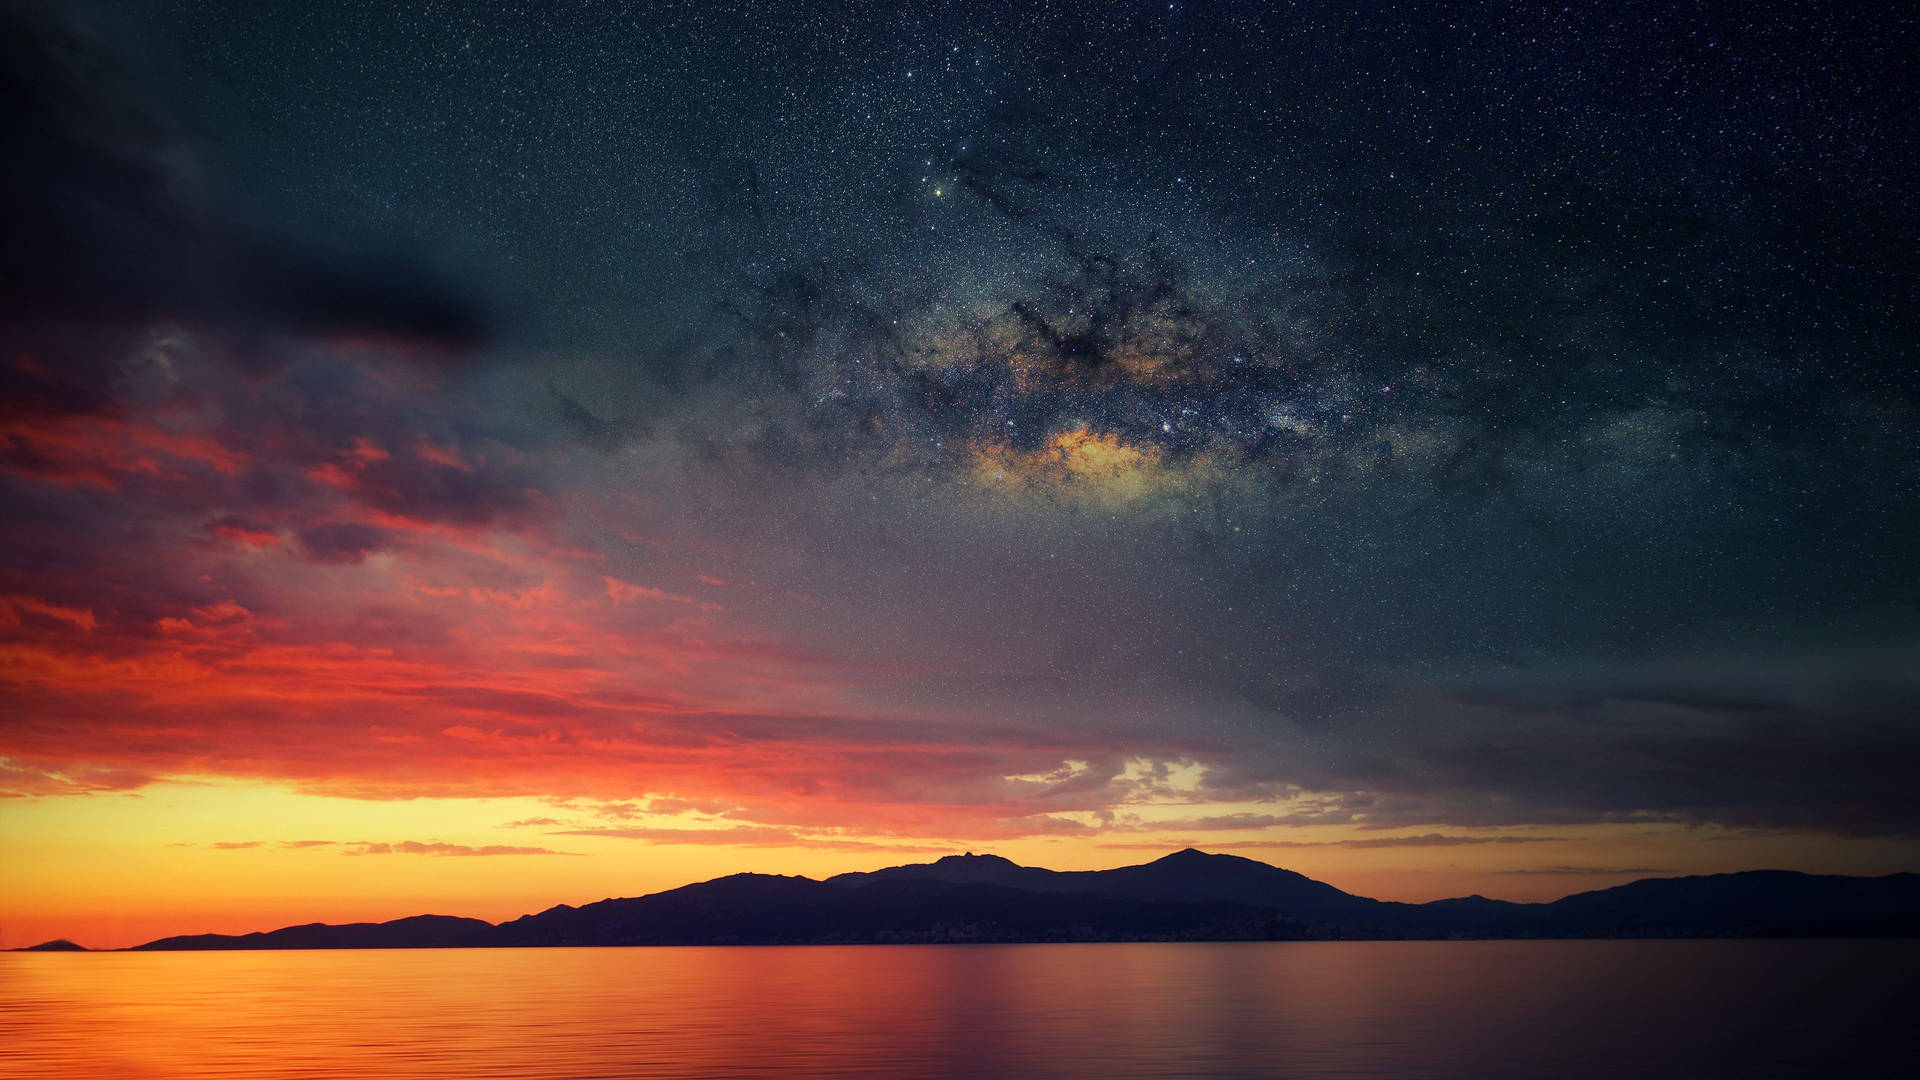 Sunset And Galaxy On Free iPad Wallpaper